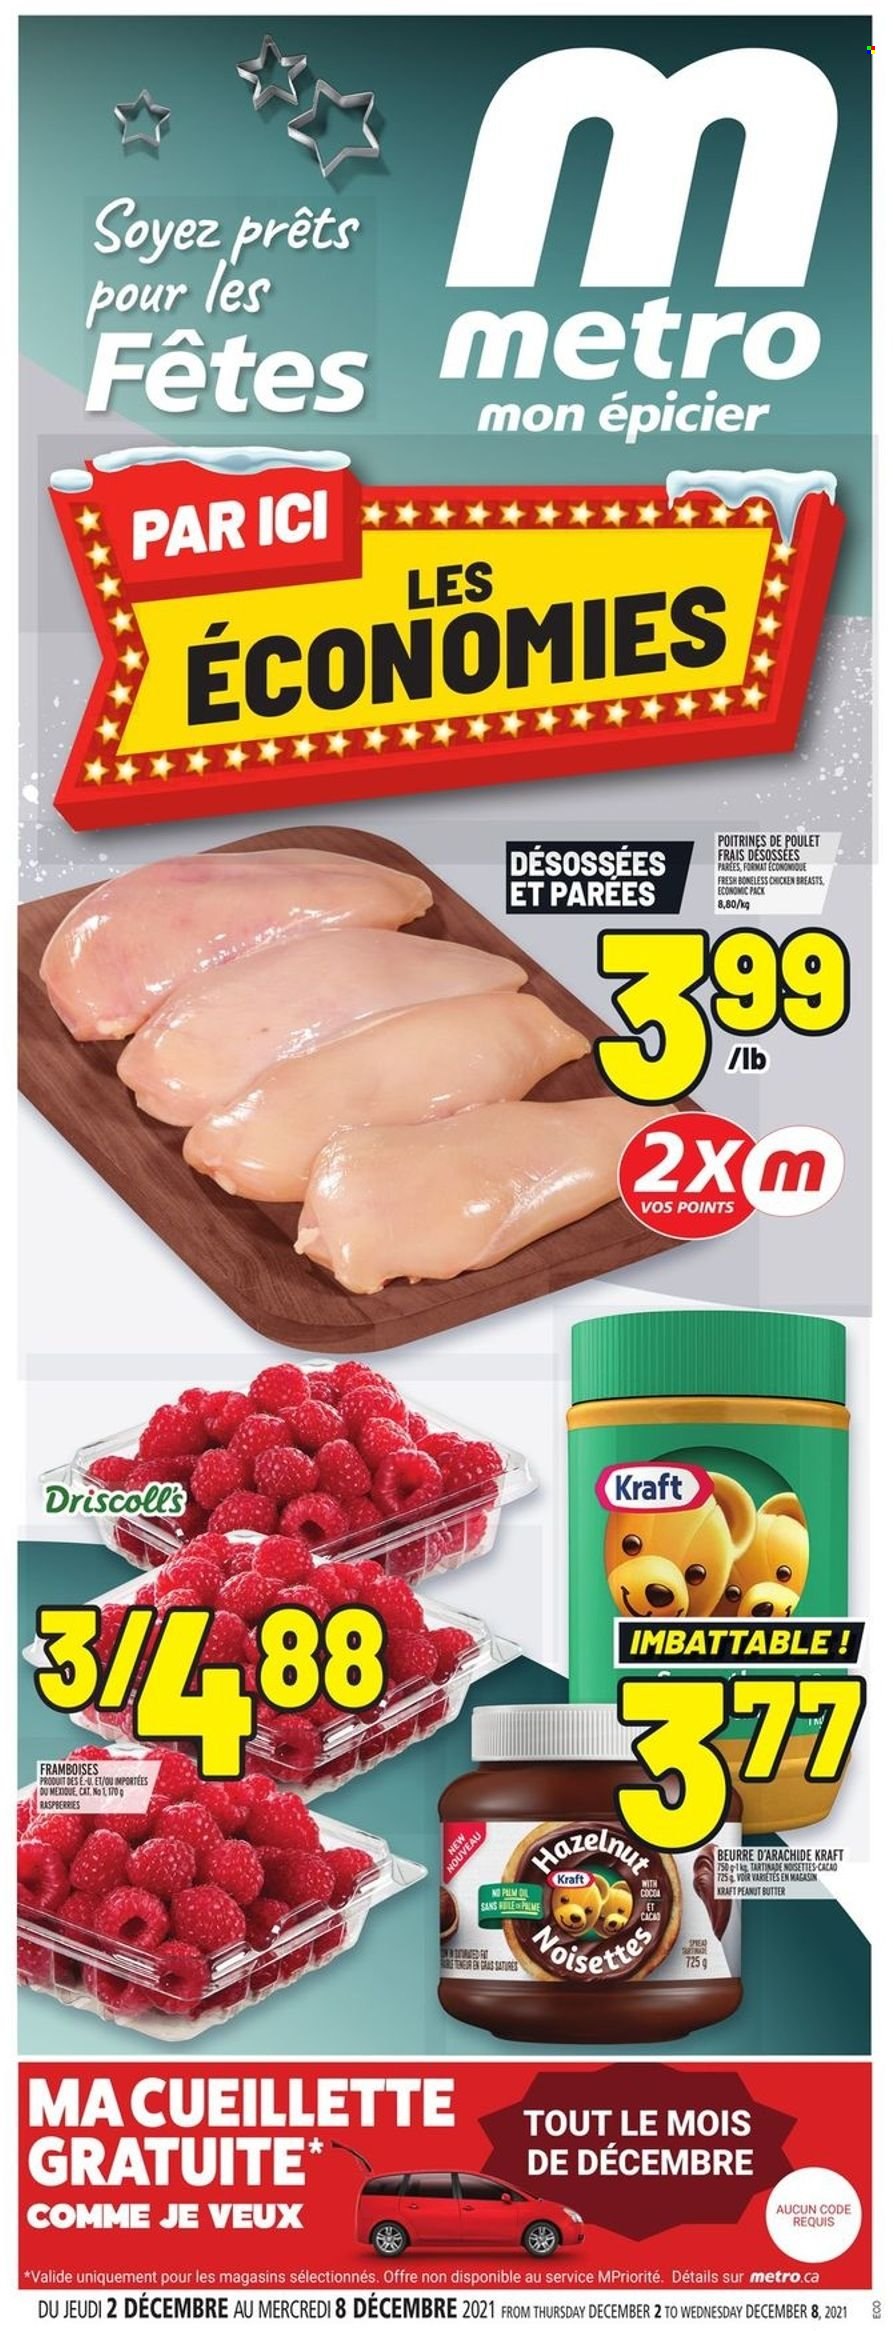 Metro Flyer - December 02, 2021 - December 08, 2021 - Sales products - Kraft®, peanut butter, chicken breasts. Page 1.